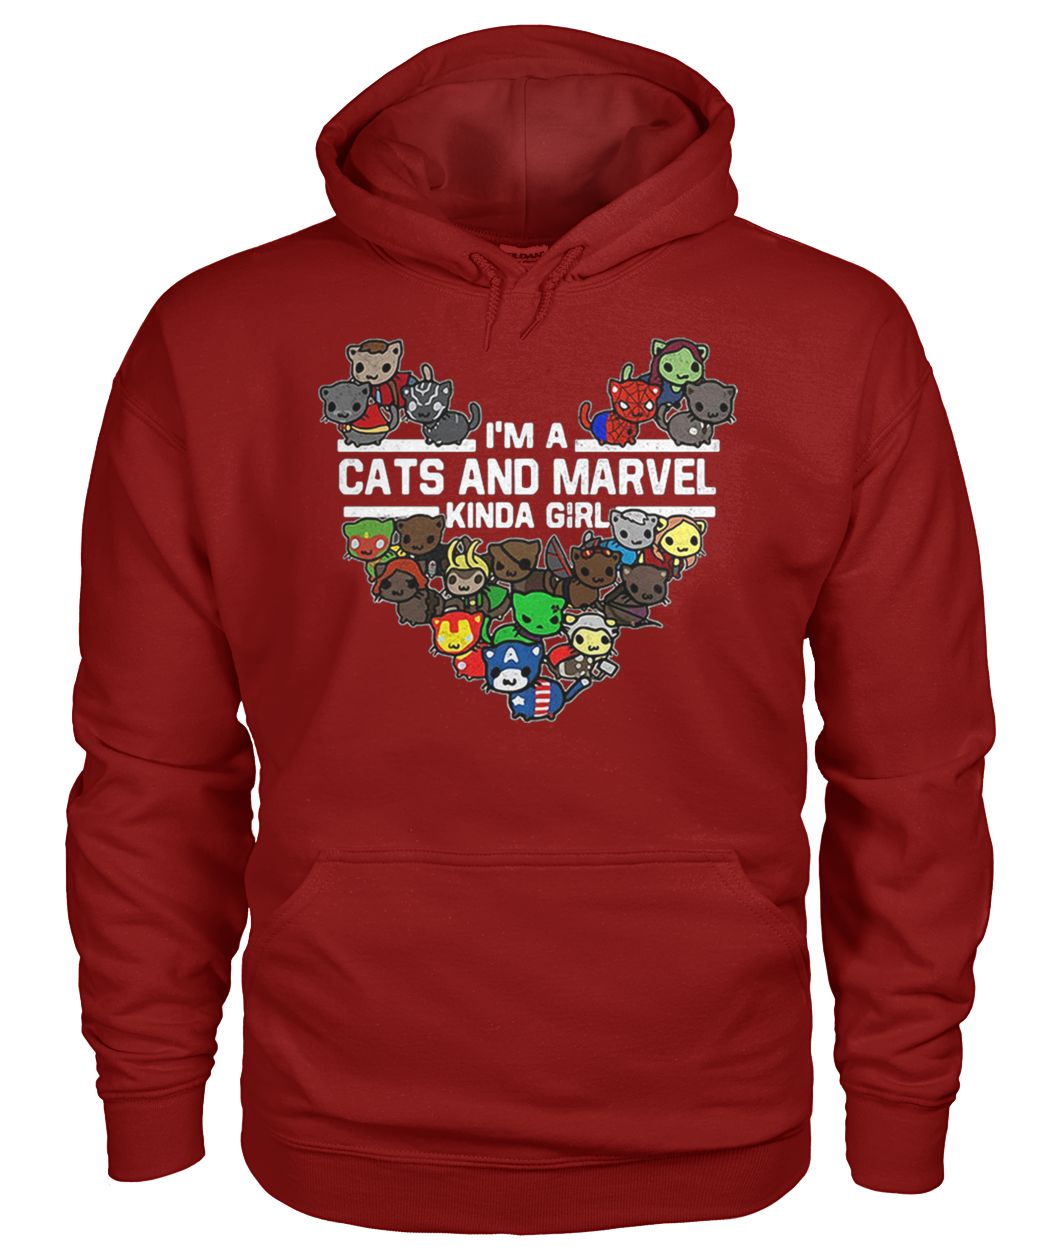 Marvel avengers endgame I'm a cats and Marvel kinda girl gildan hoodie